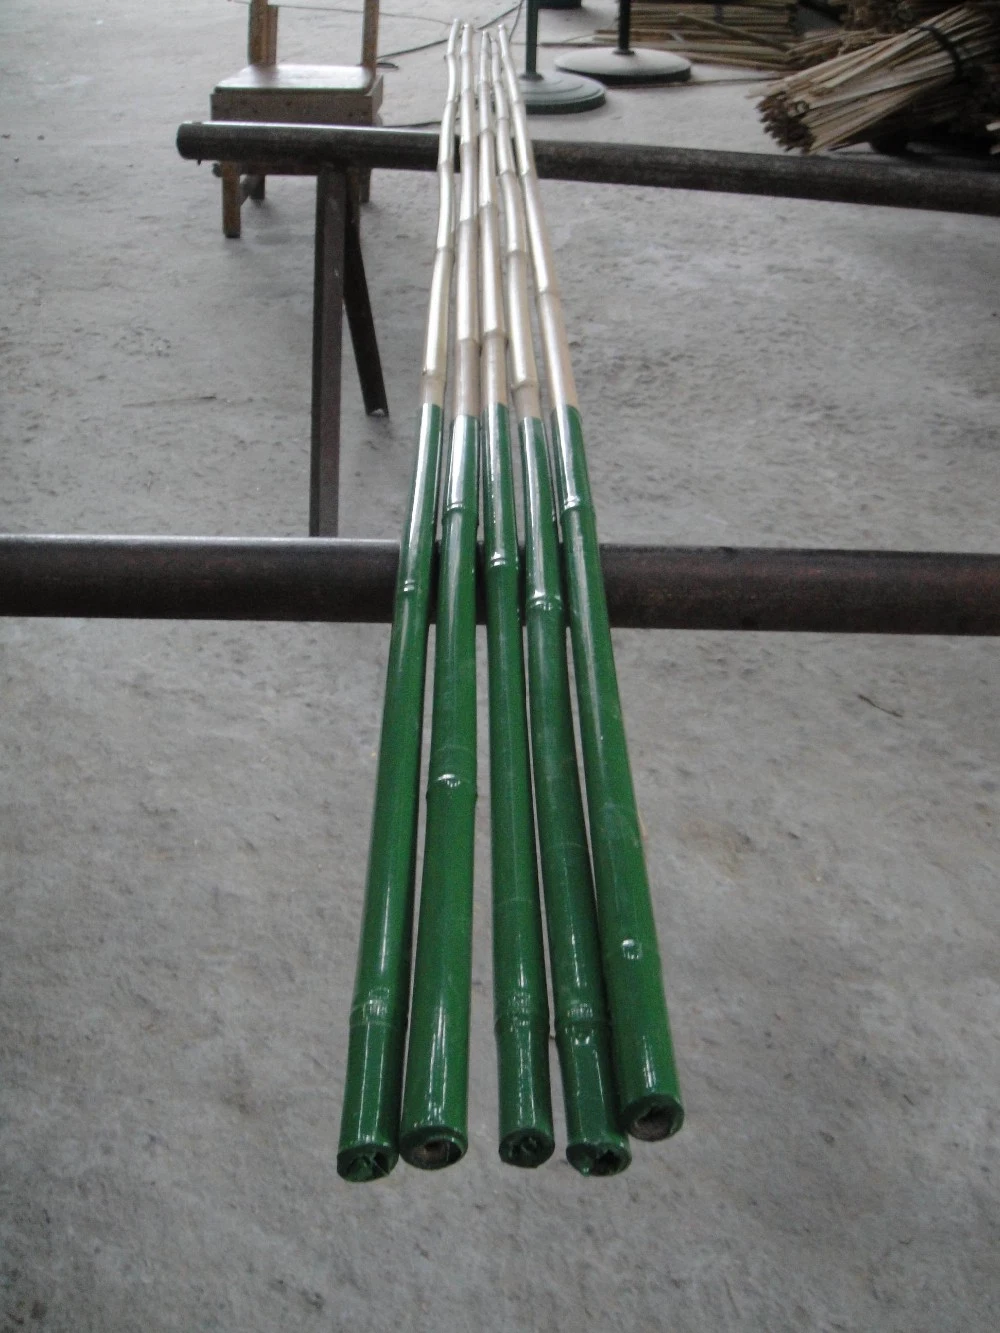 Cañas de bambú en la capa de plástico de cañas de bambú